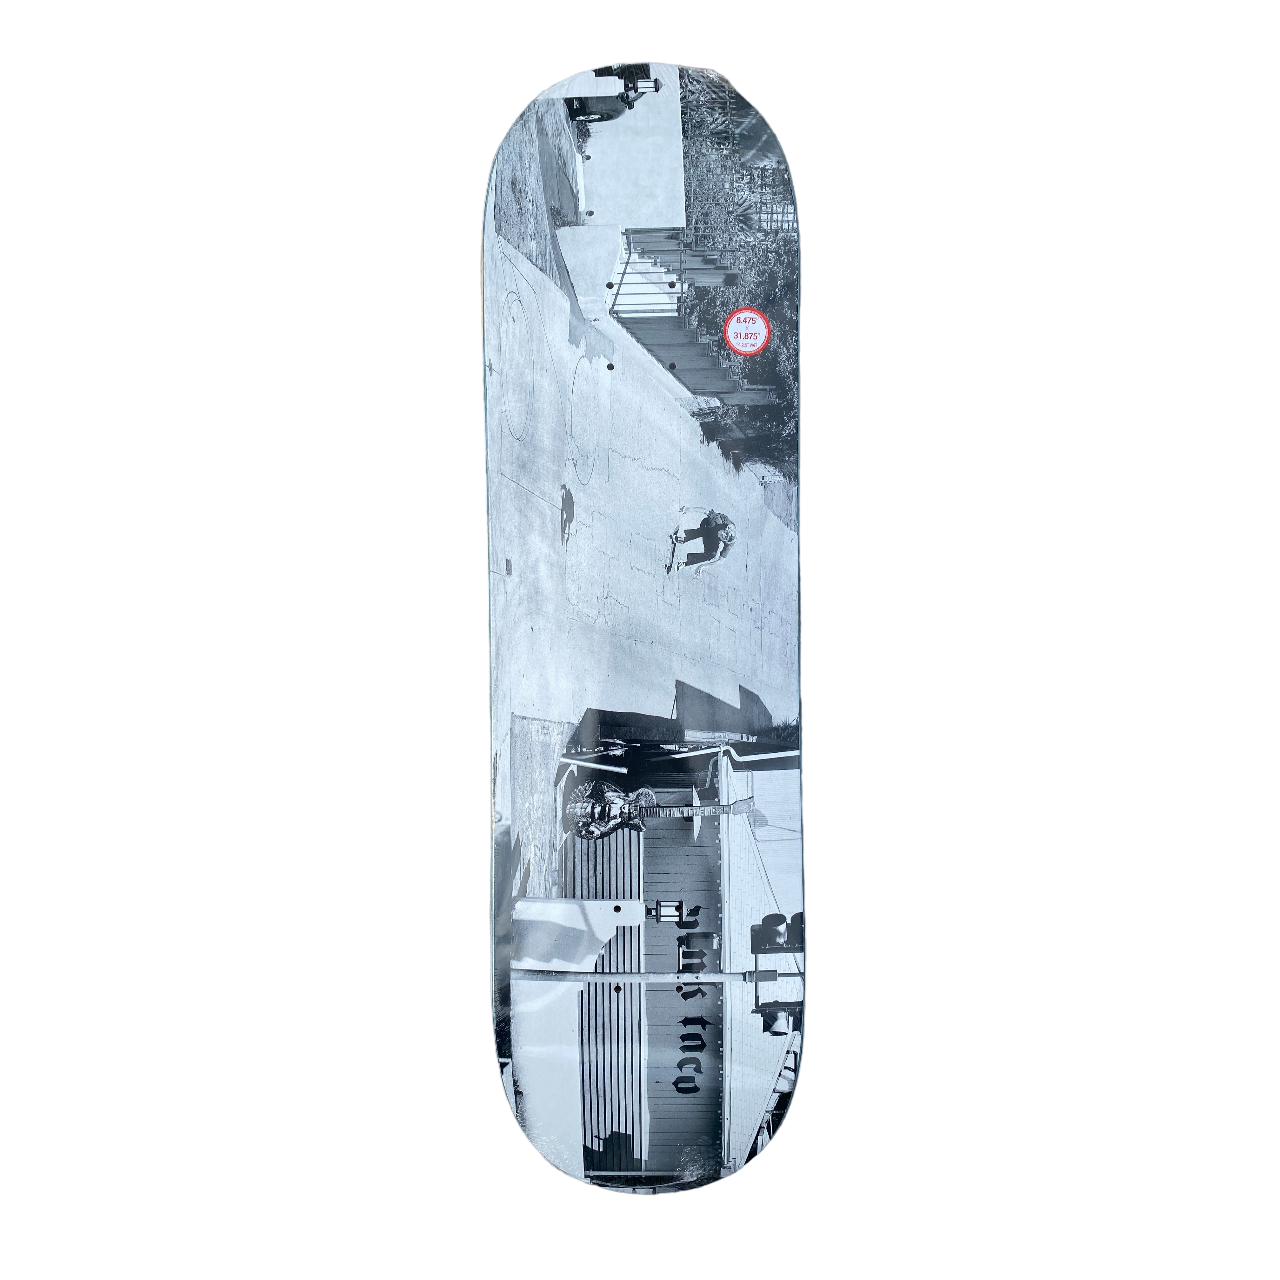 Pastellfärg mini longboard med ledde blinkande fyra hjul retro skateboard